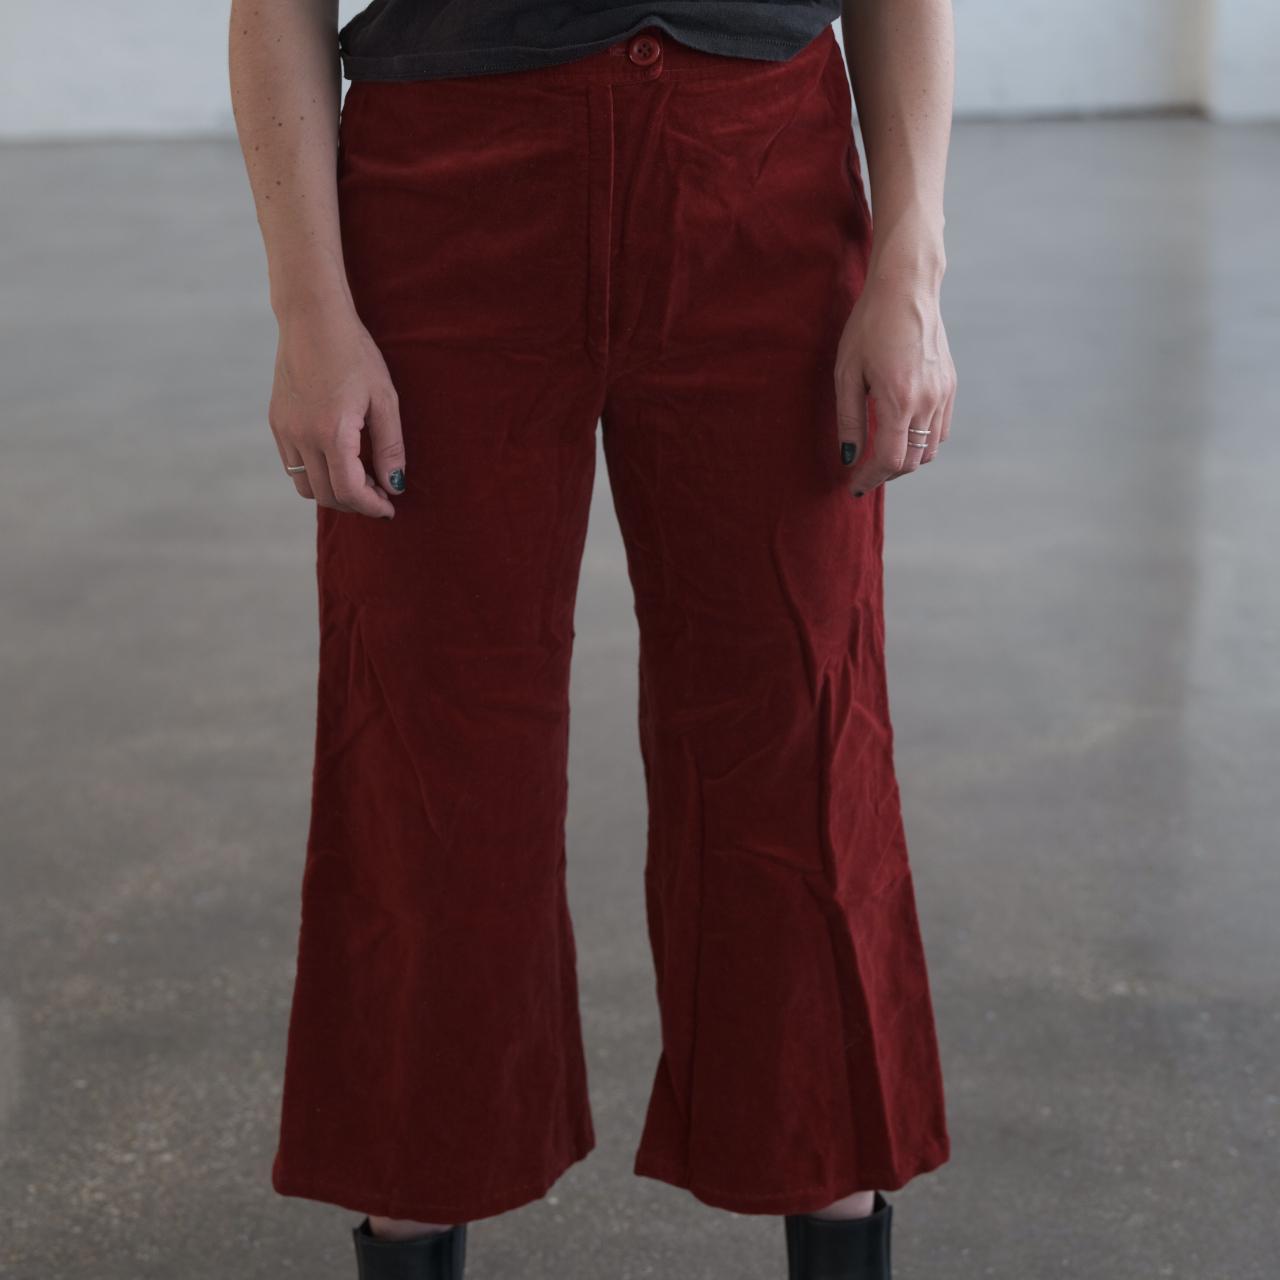 Product Image 2 - Retro red velvet pants crop

Size: